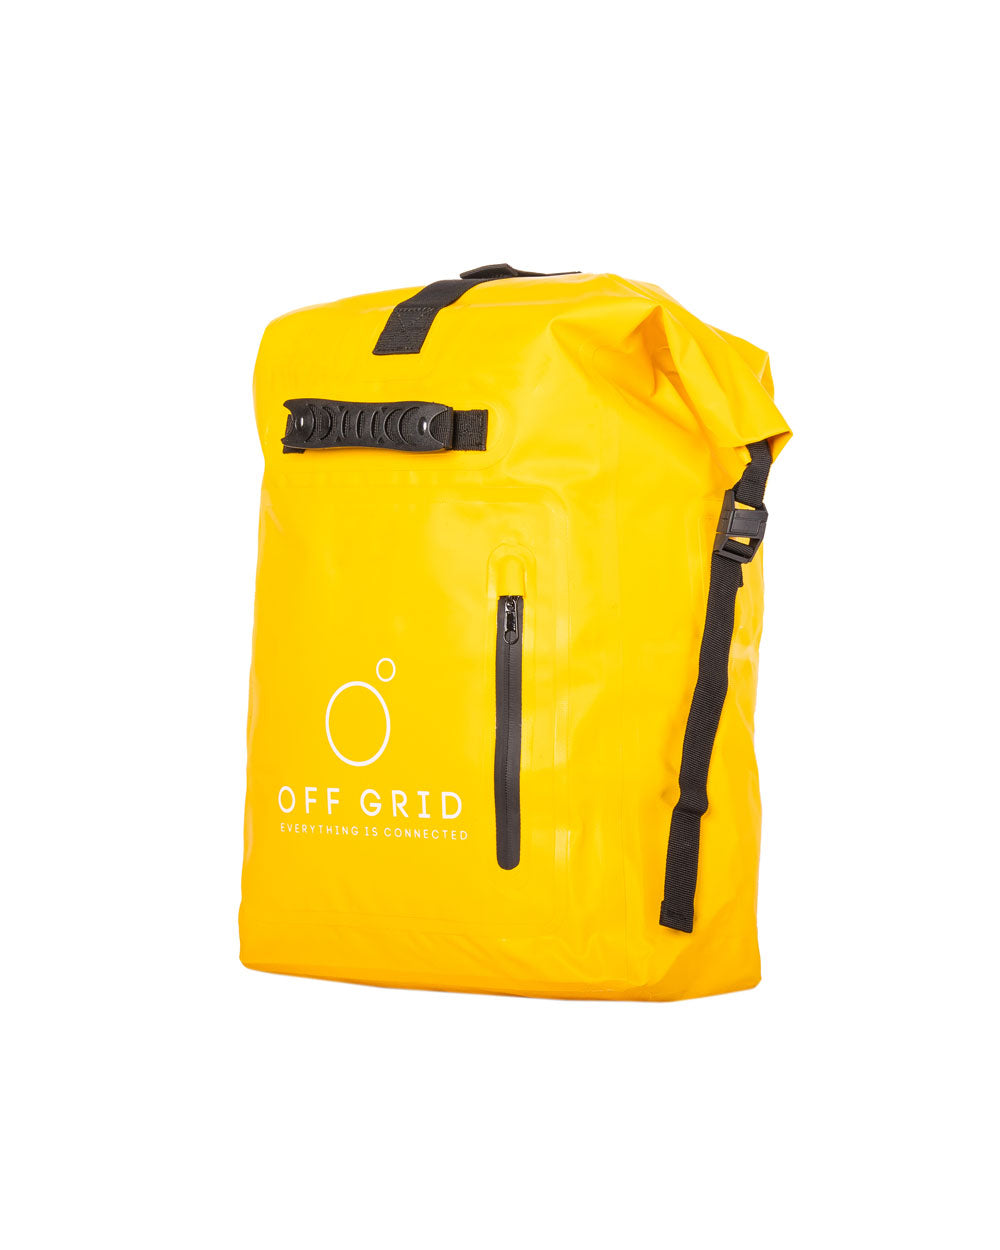 Insulator backpack